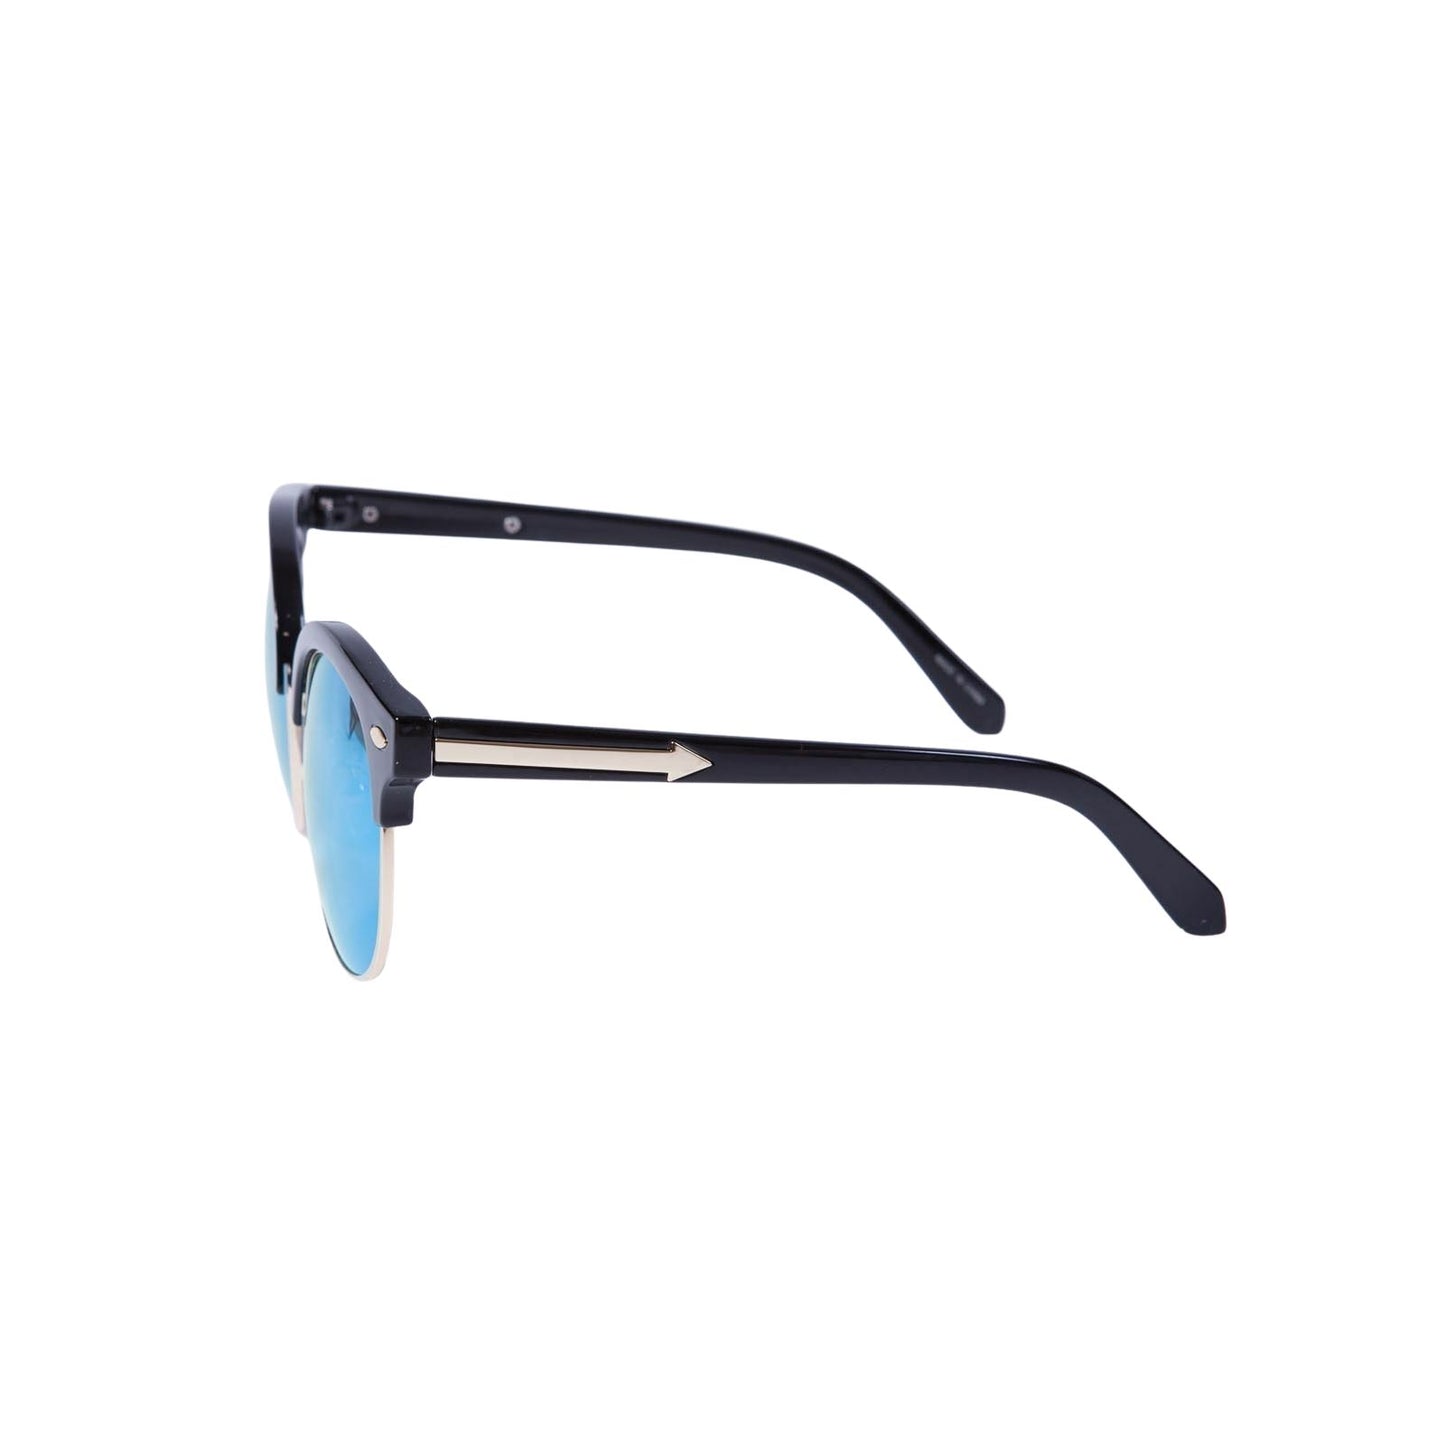 New Womens Mens Blue Reflective Lens Retro Sunglasses Unisex Fashion Black Frame - Pantsnsox